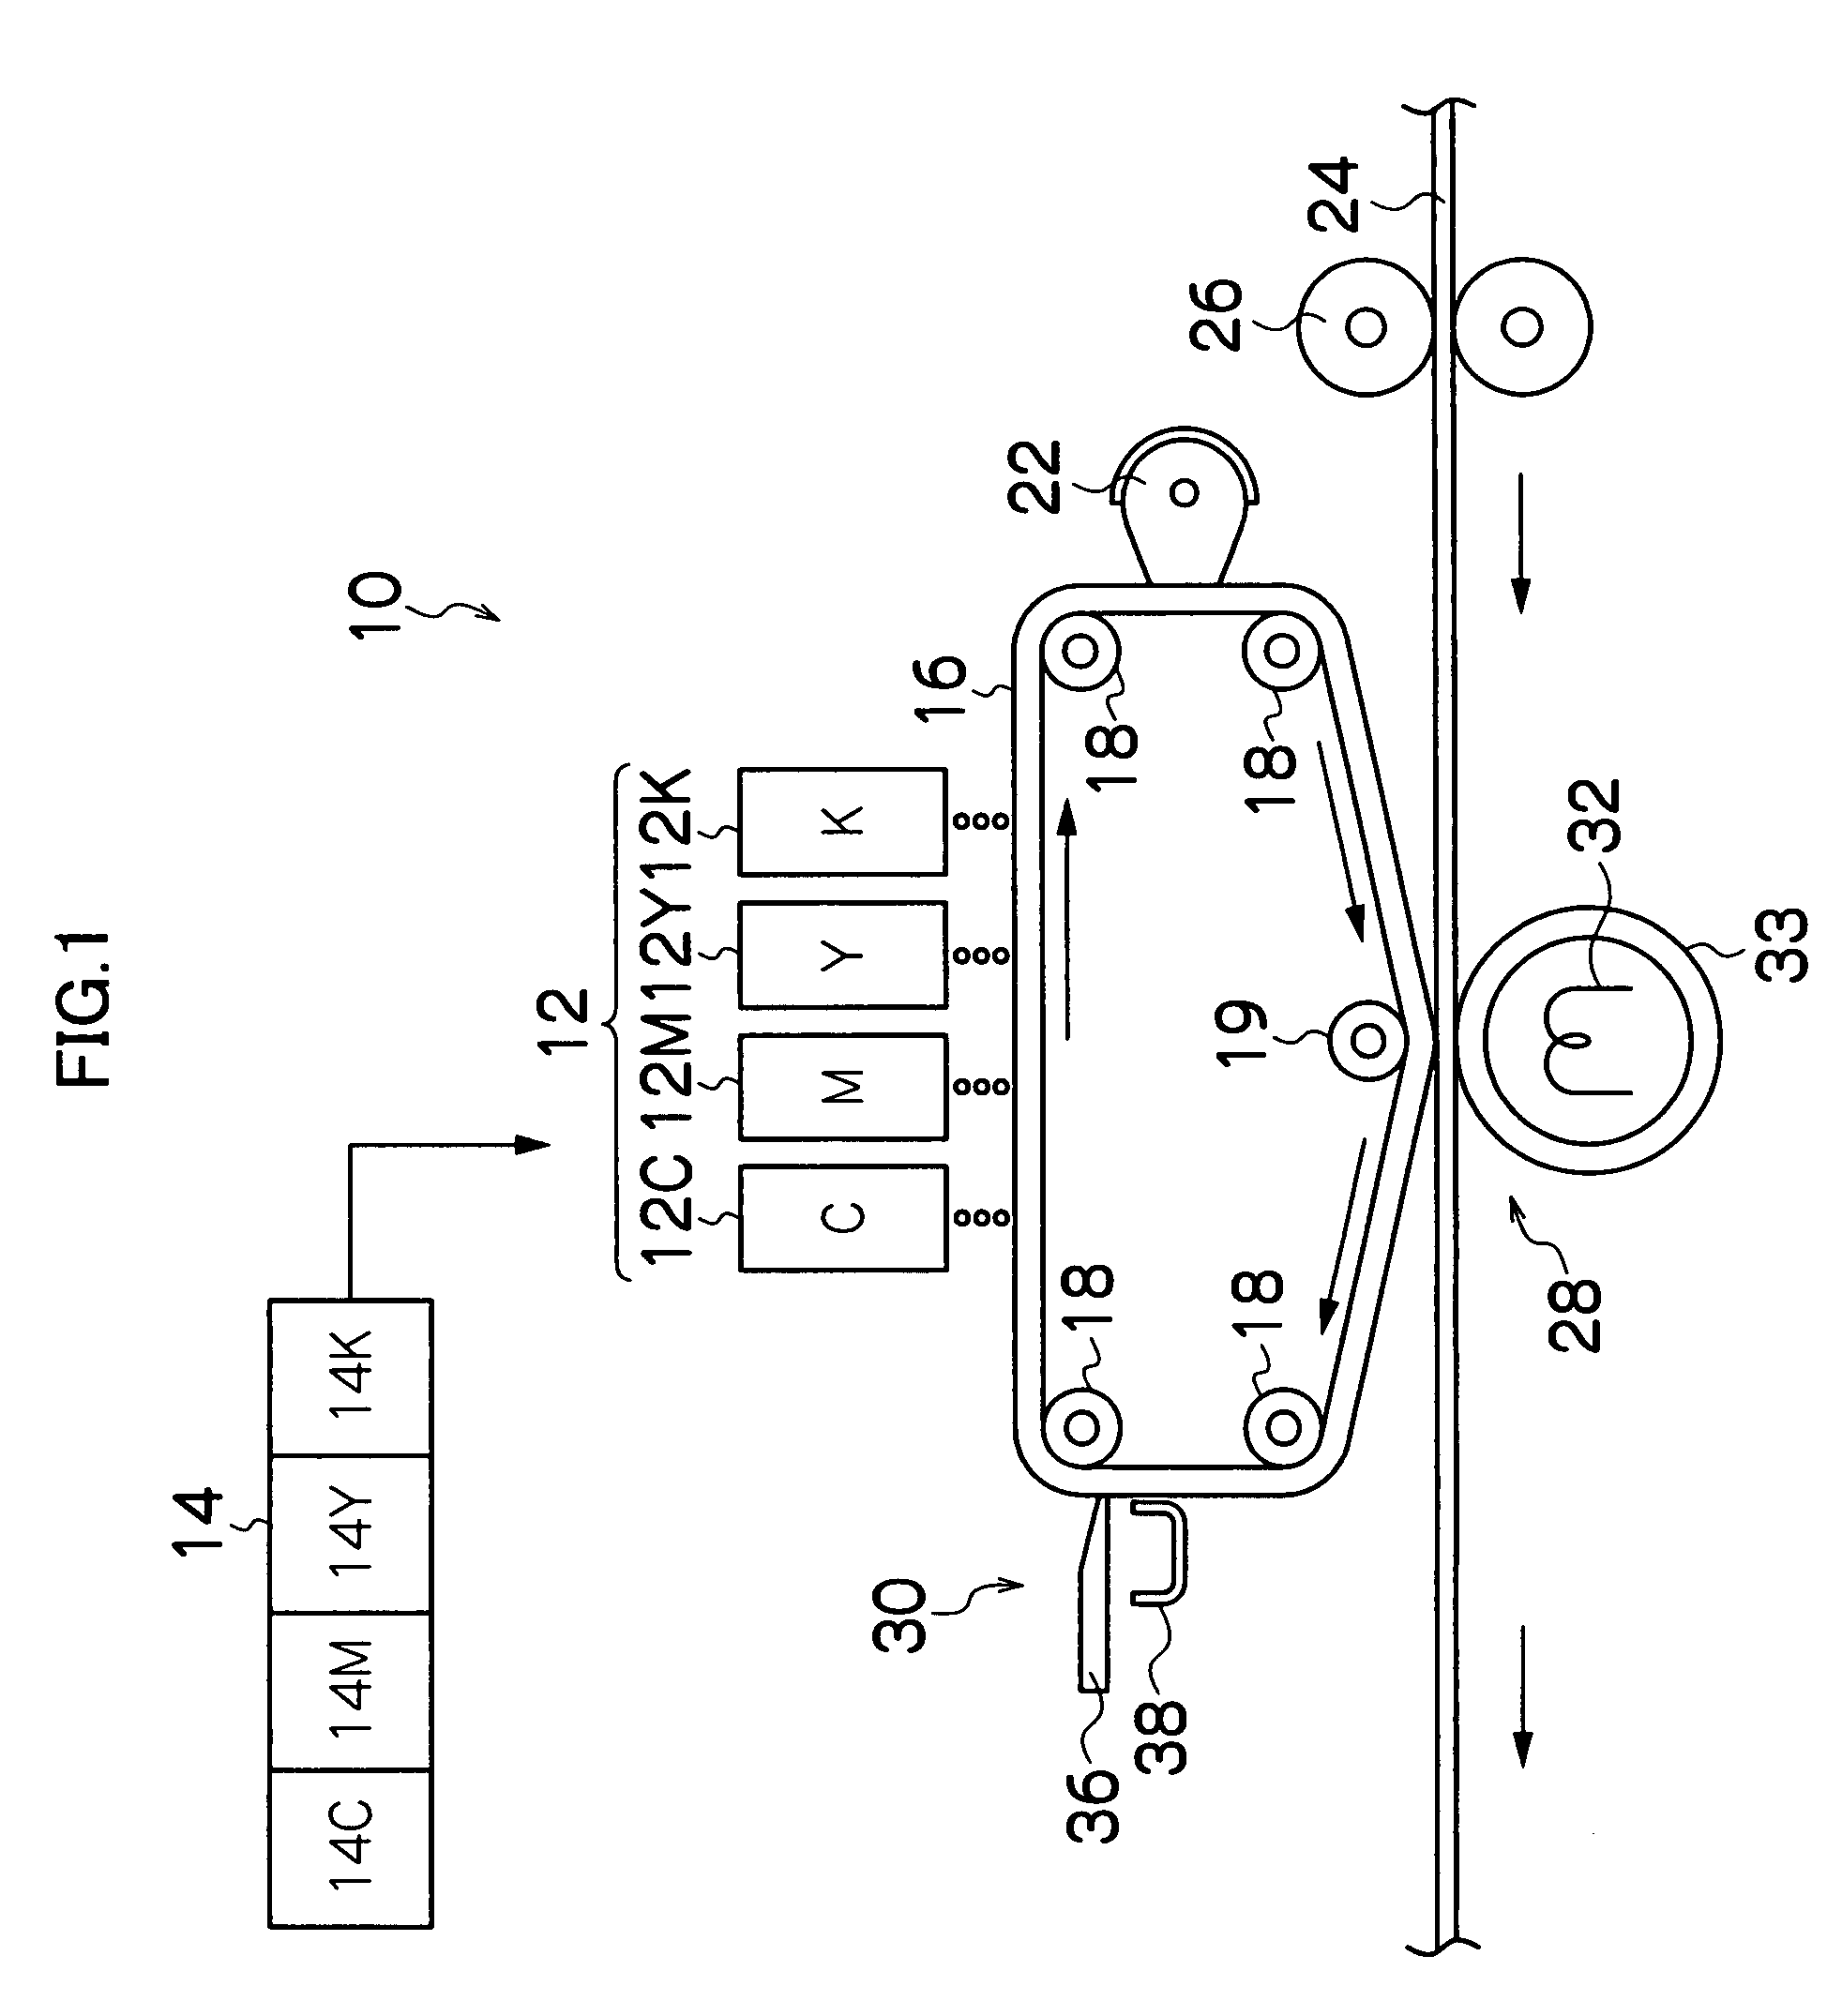 Inkjet recording method and apparatus